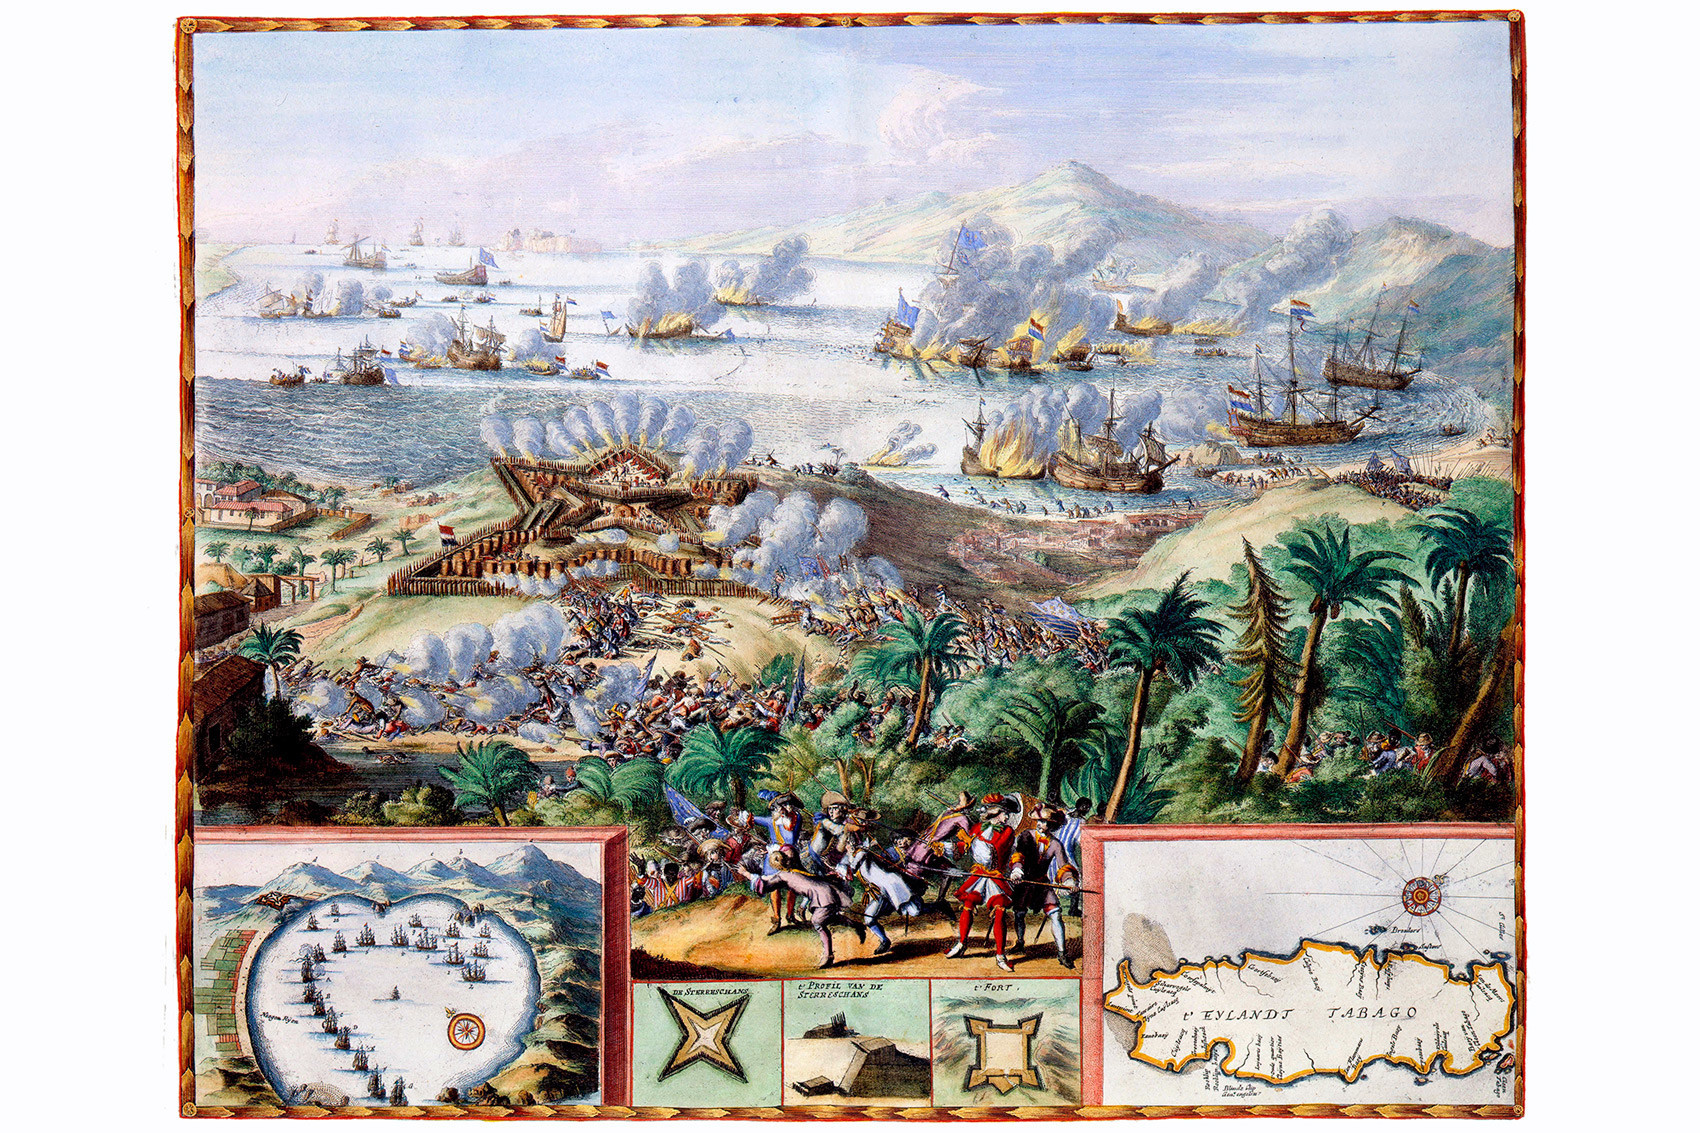 Tobago, por Von Romeyn de Hooghe, Amsterdã 1677.